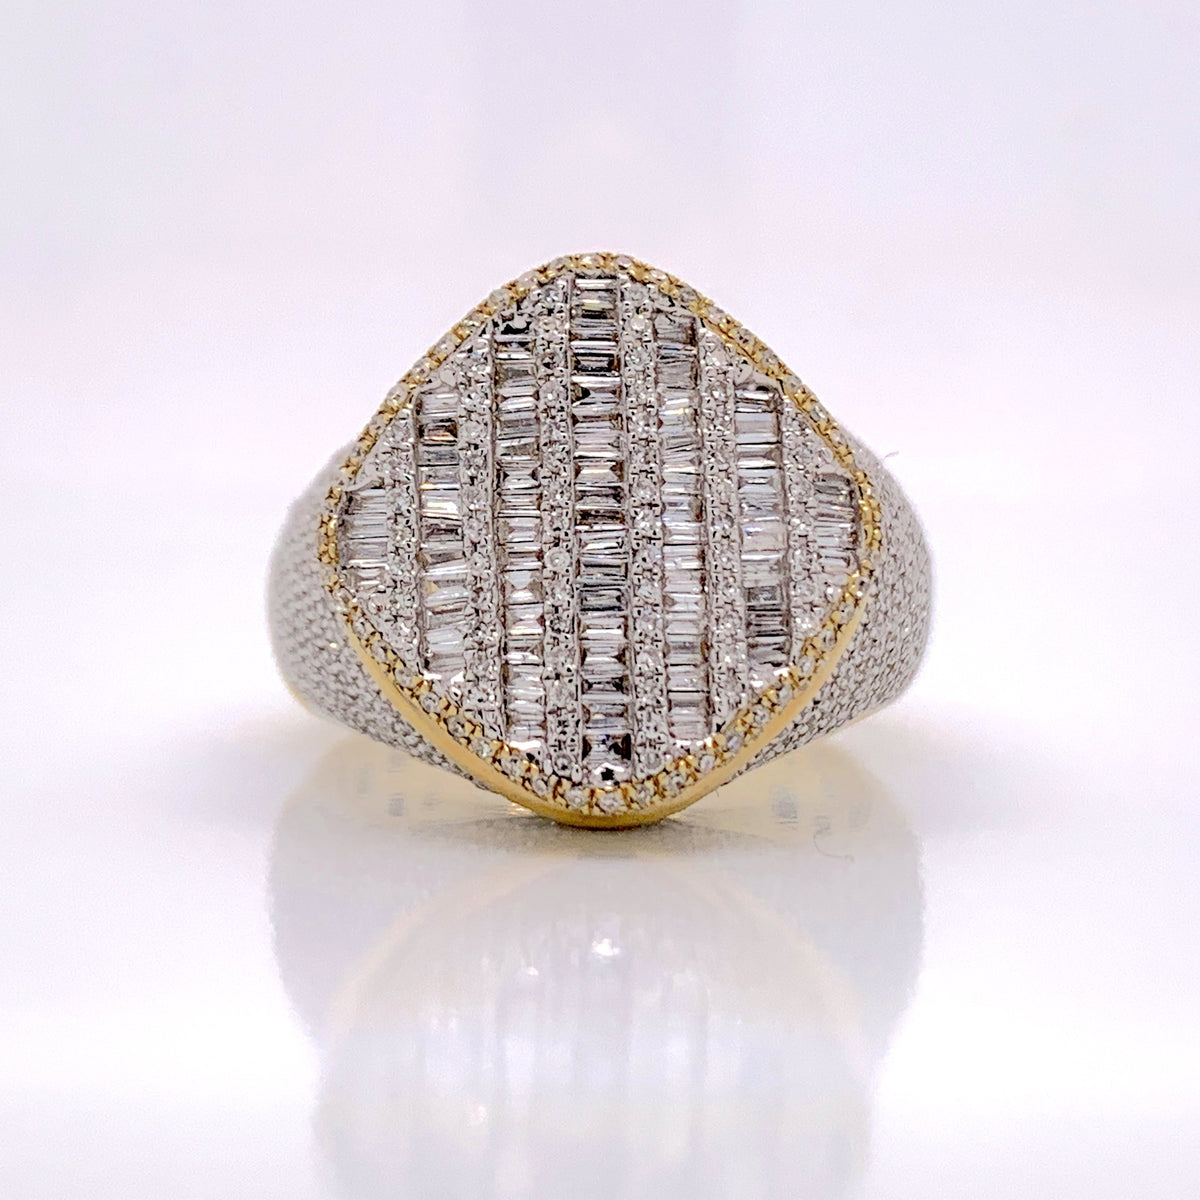 1.95CT Diamond Ring in 10K Gold - White Carat Diamonds 